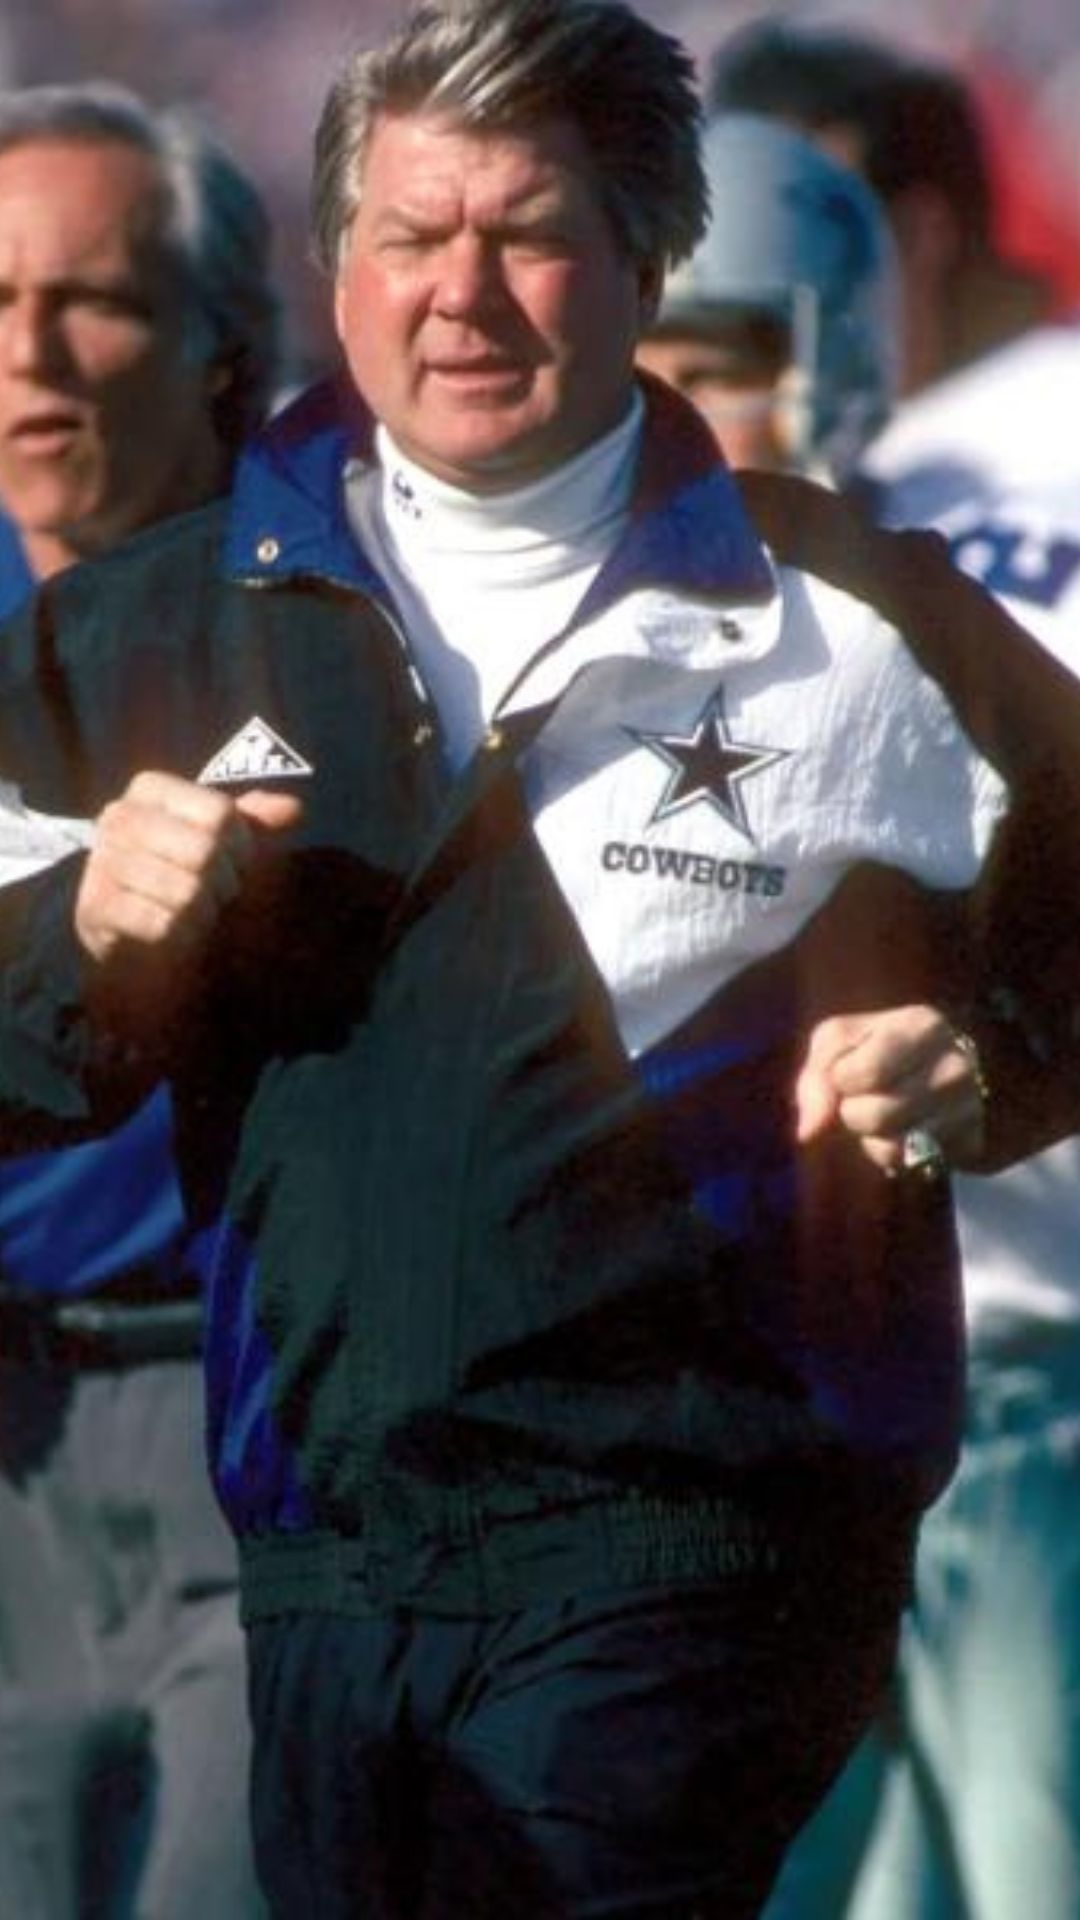 Johnson Coaching The Oklahoma Cowboys (Source: Cow boys wire)